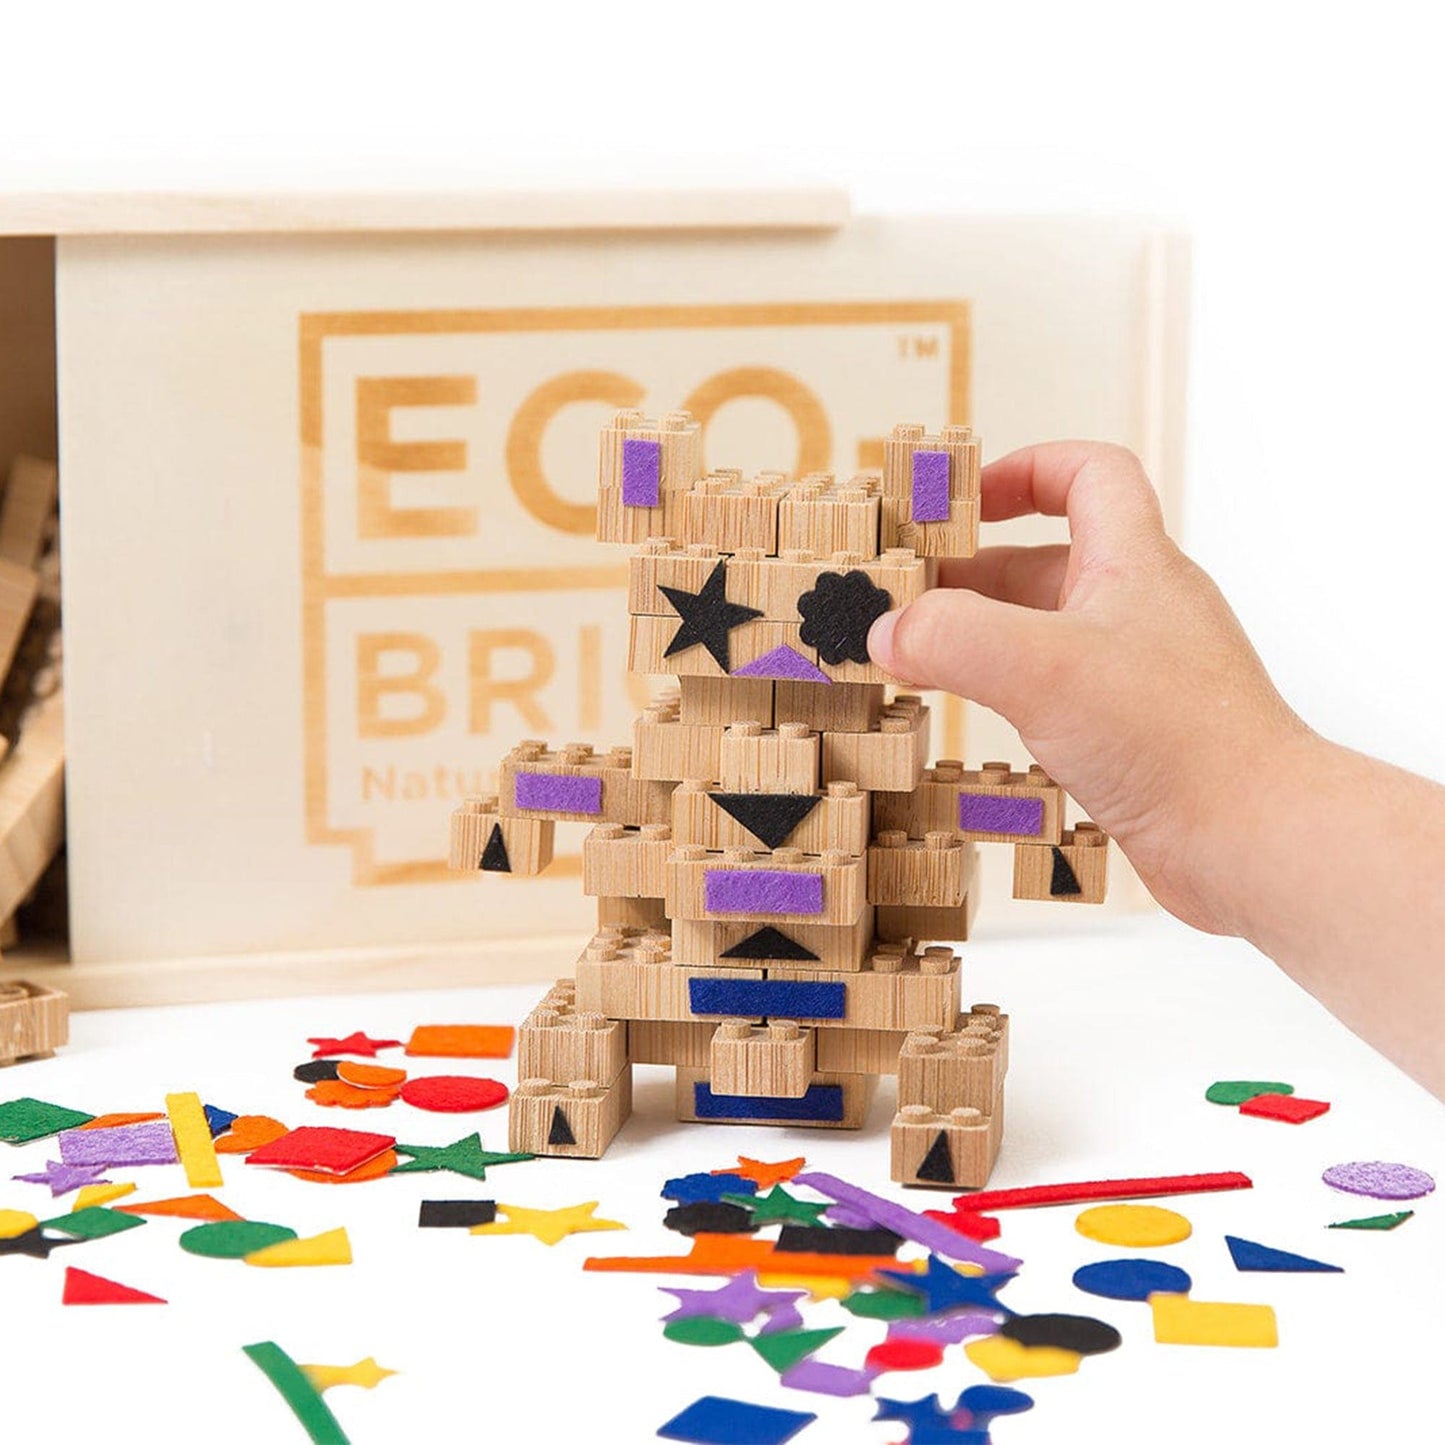 Eco-Bricks Bamboo 90pcs + Felt